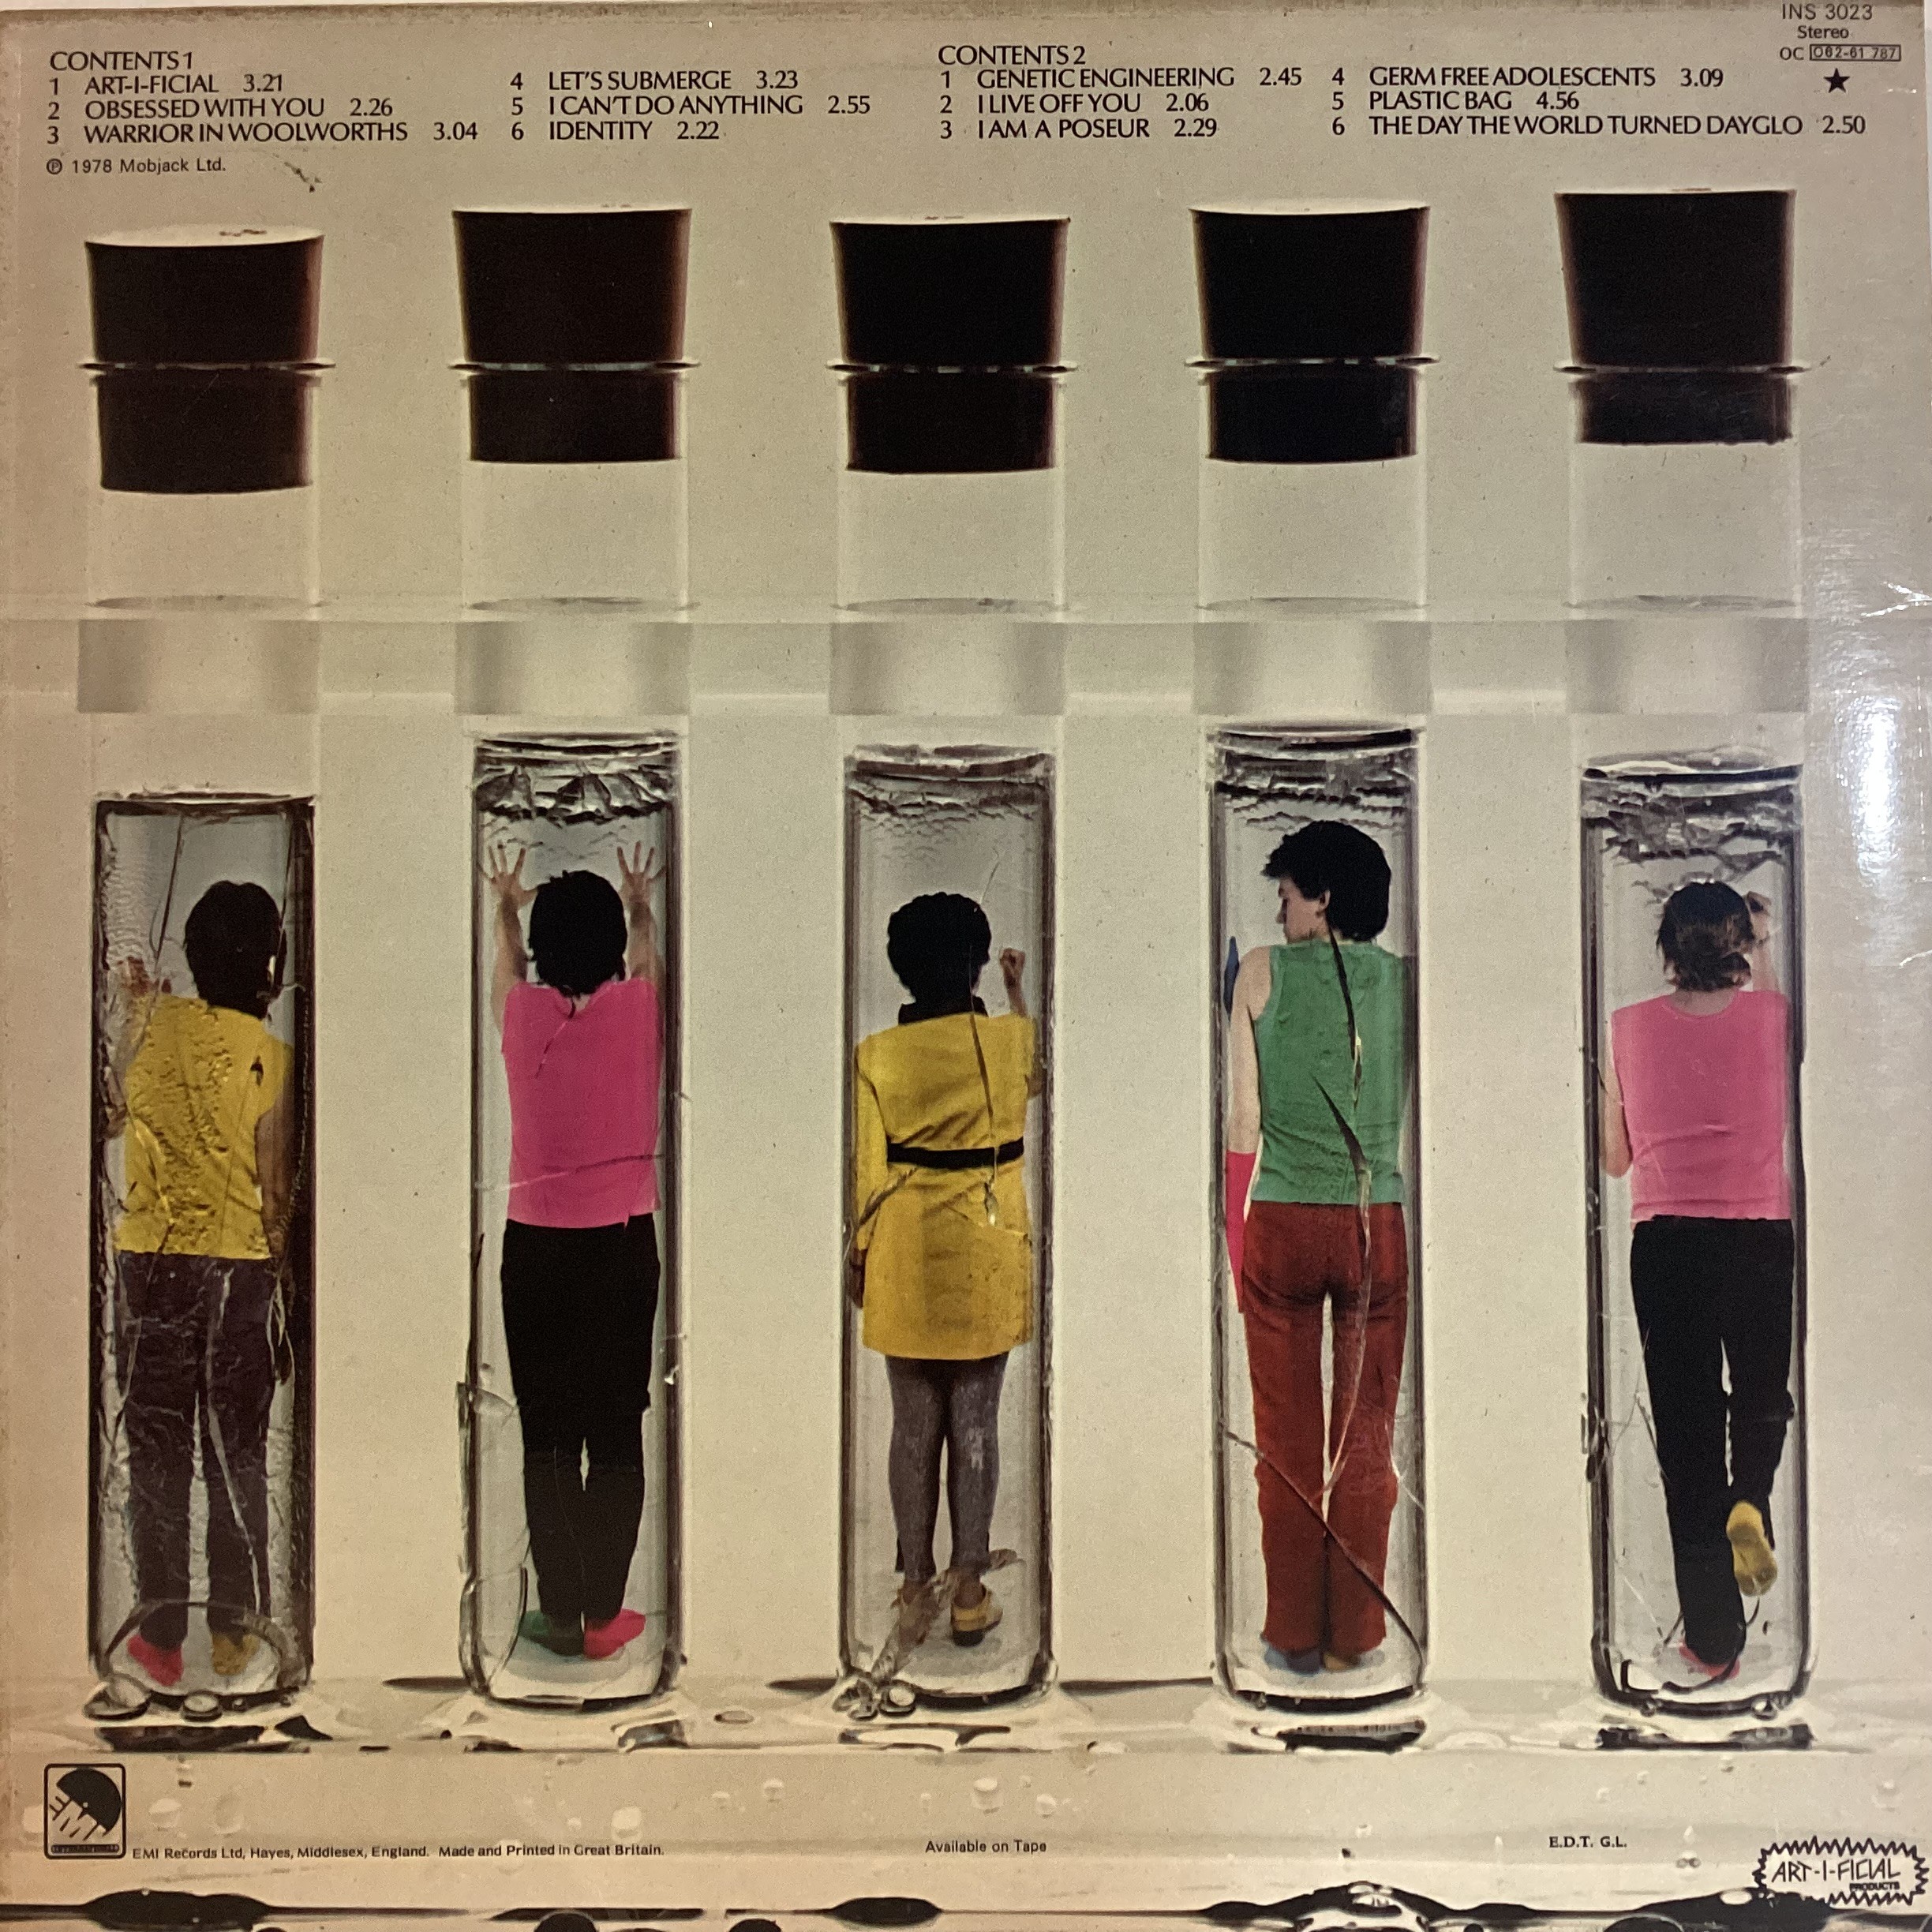 X-RAY SPEX ‘GERMFREE ADOLESCENTS’ VINYL LP RECORD. Original copy here from 1978 on EMI Records INS - Bild 2 aus 2